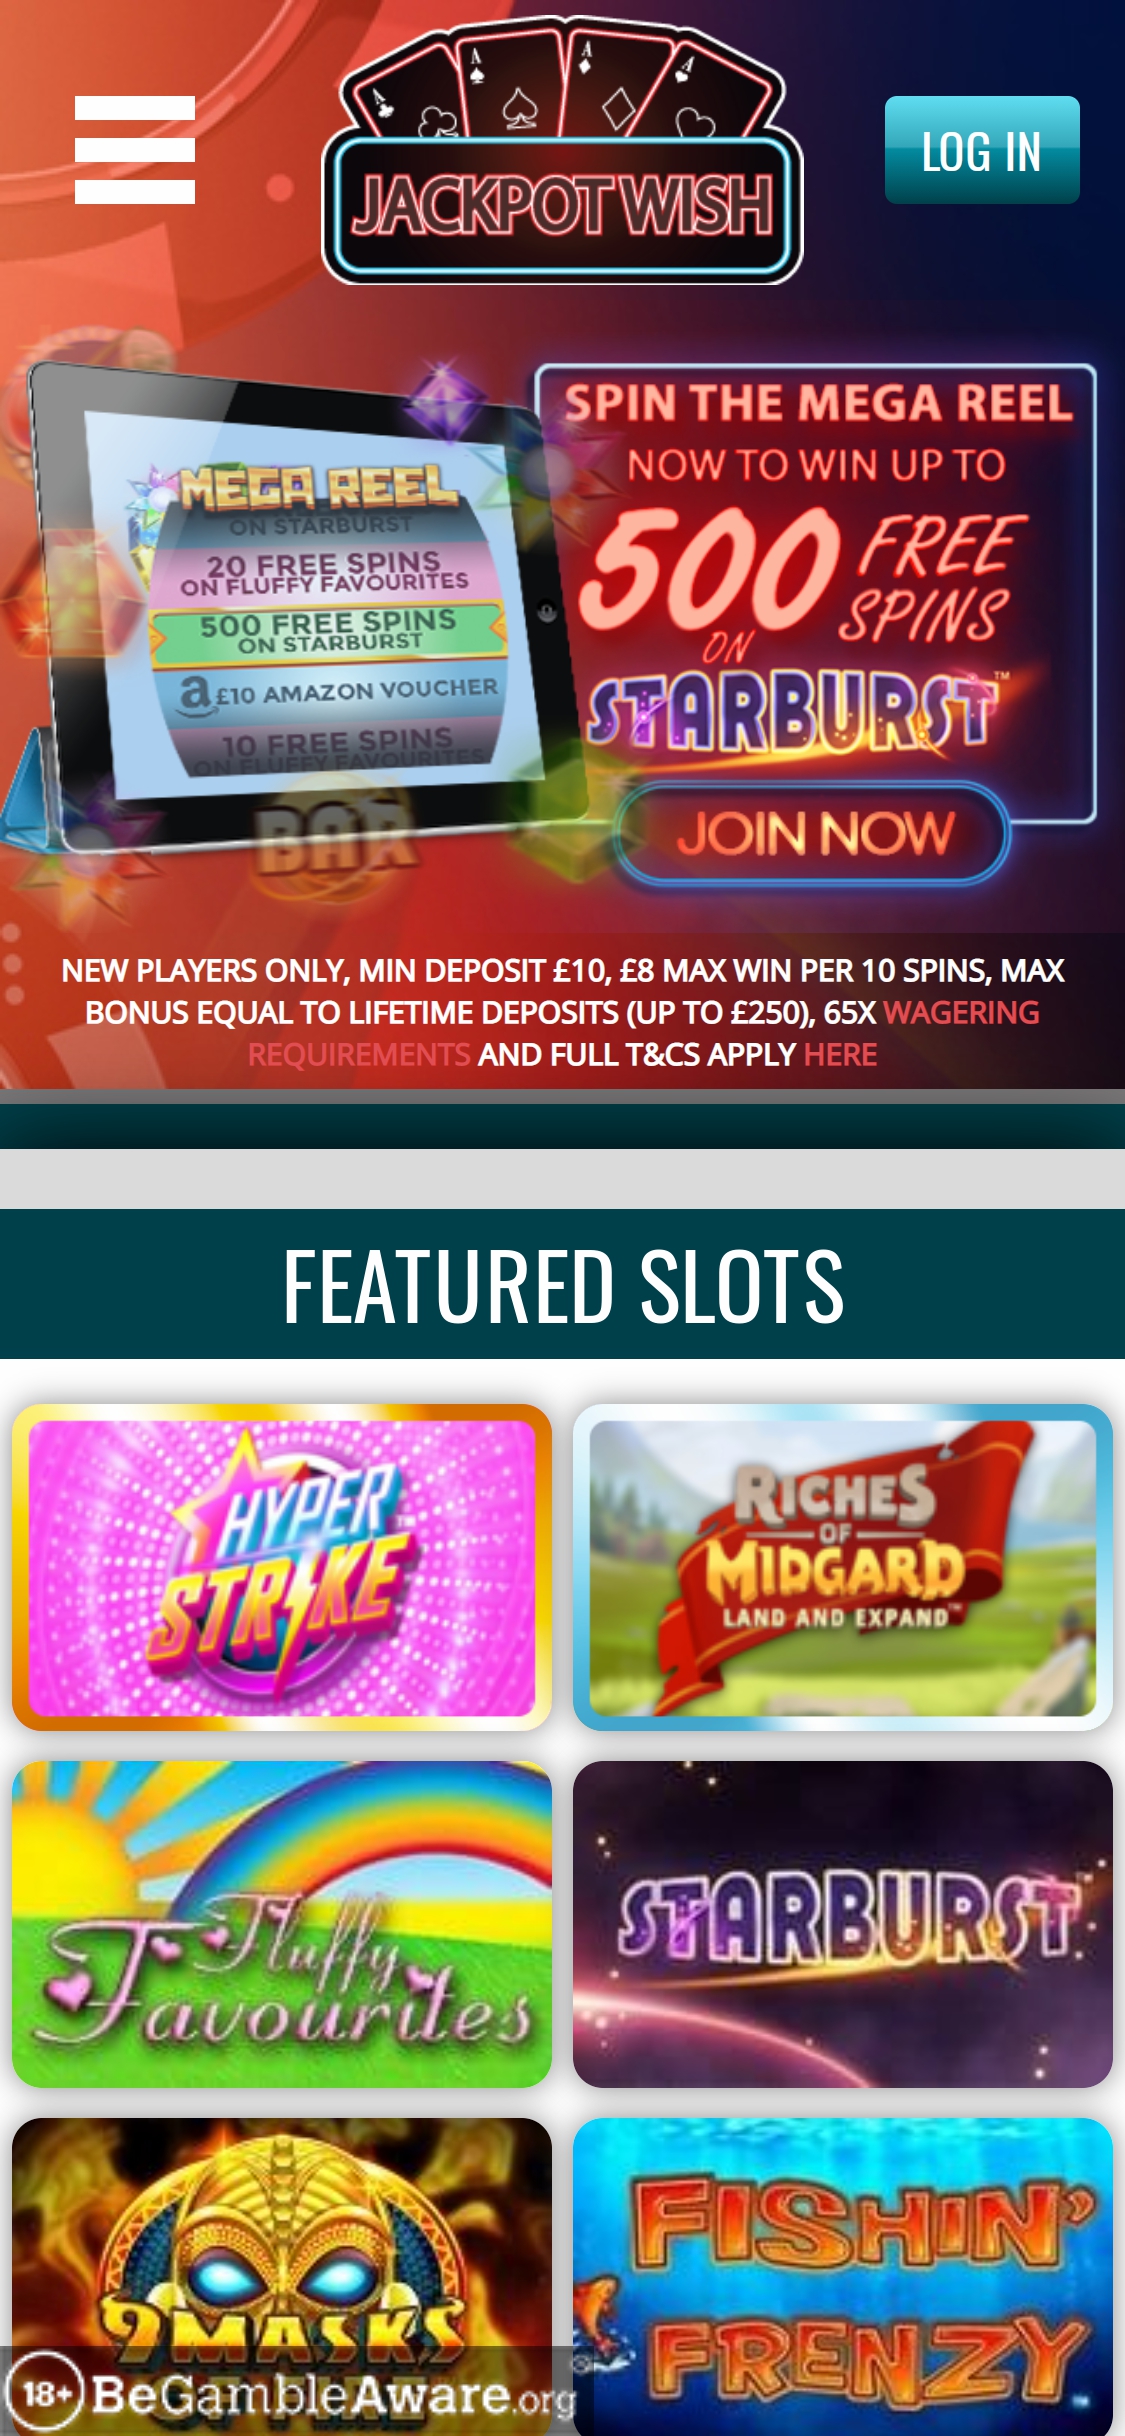 Jackpot Wish Casino Mobile Review